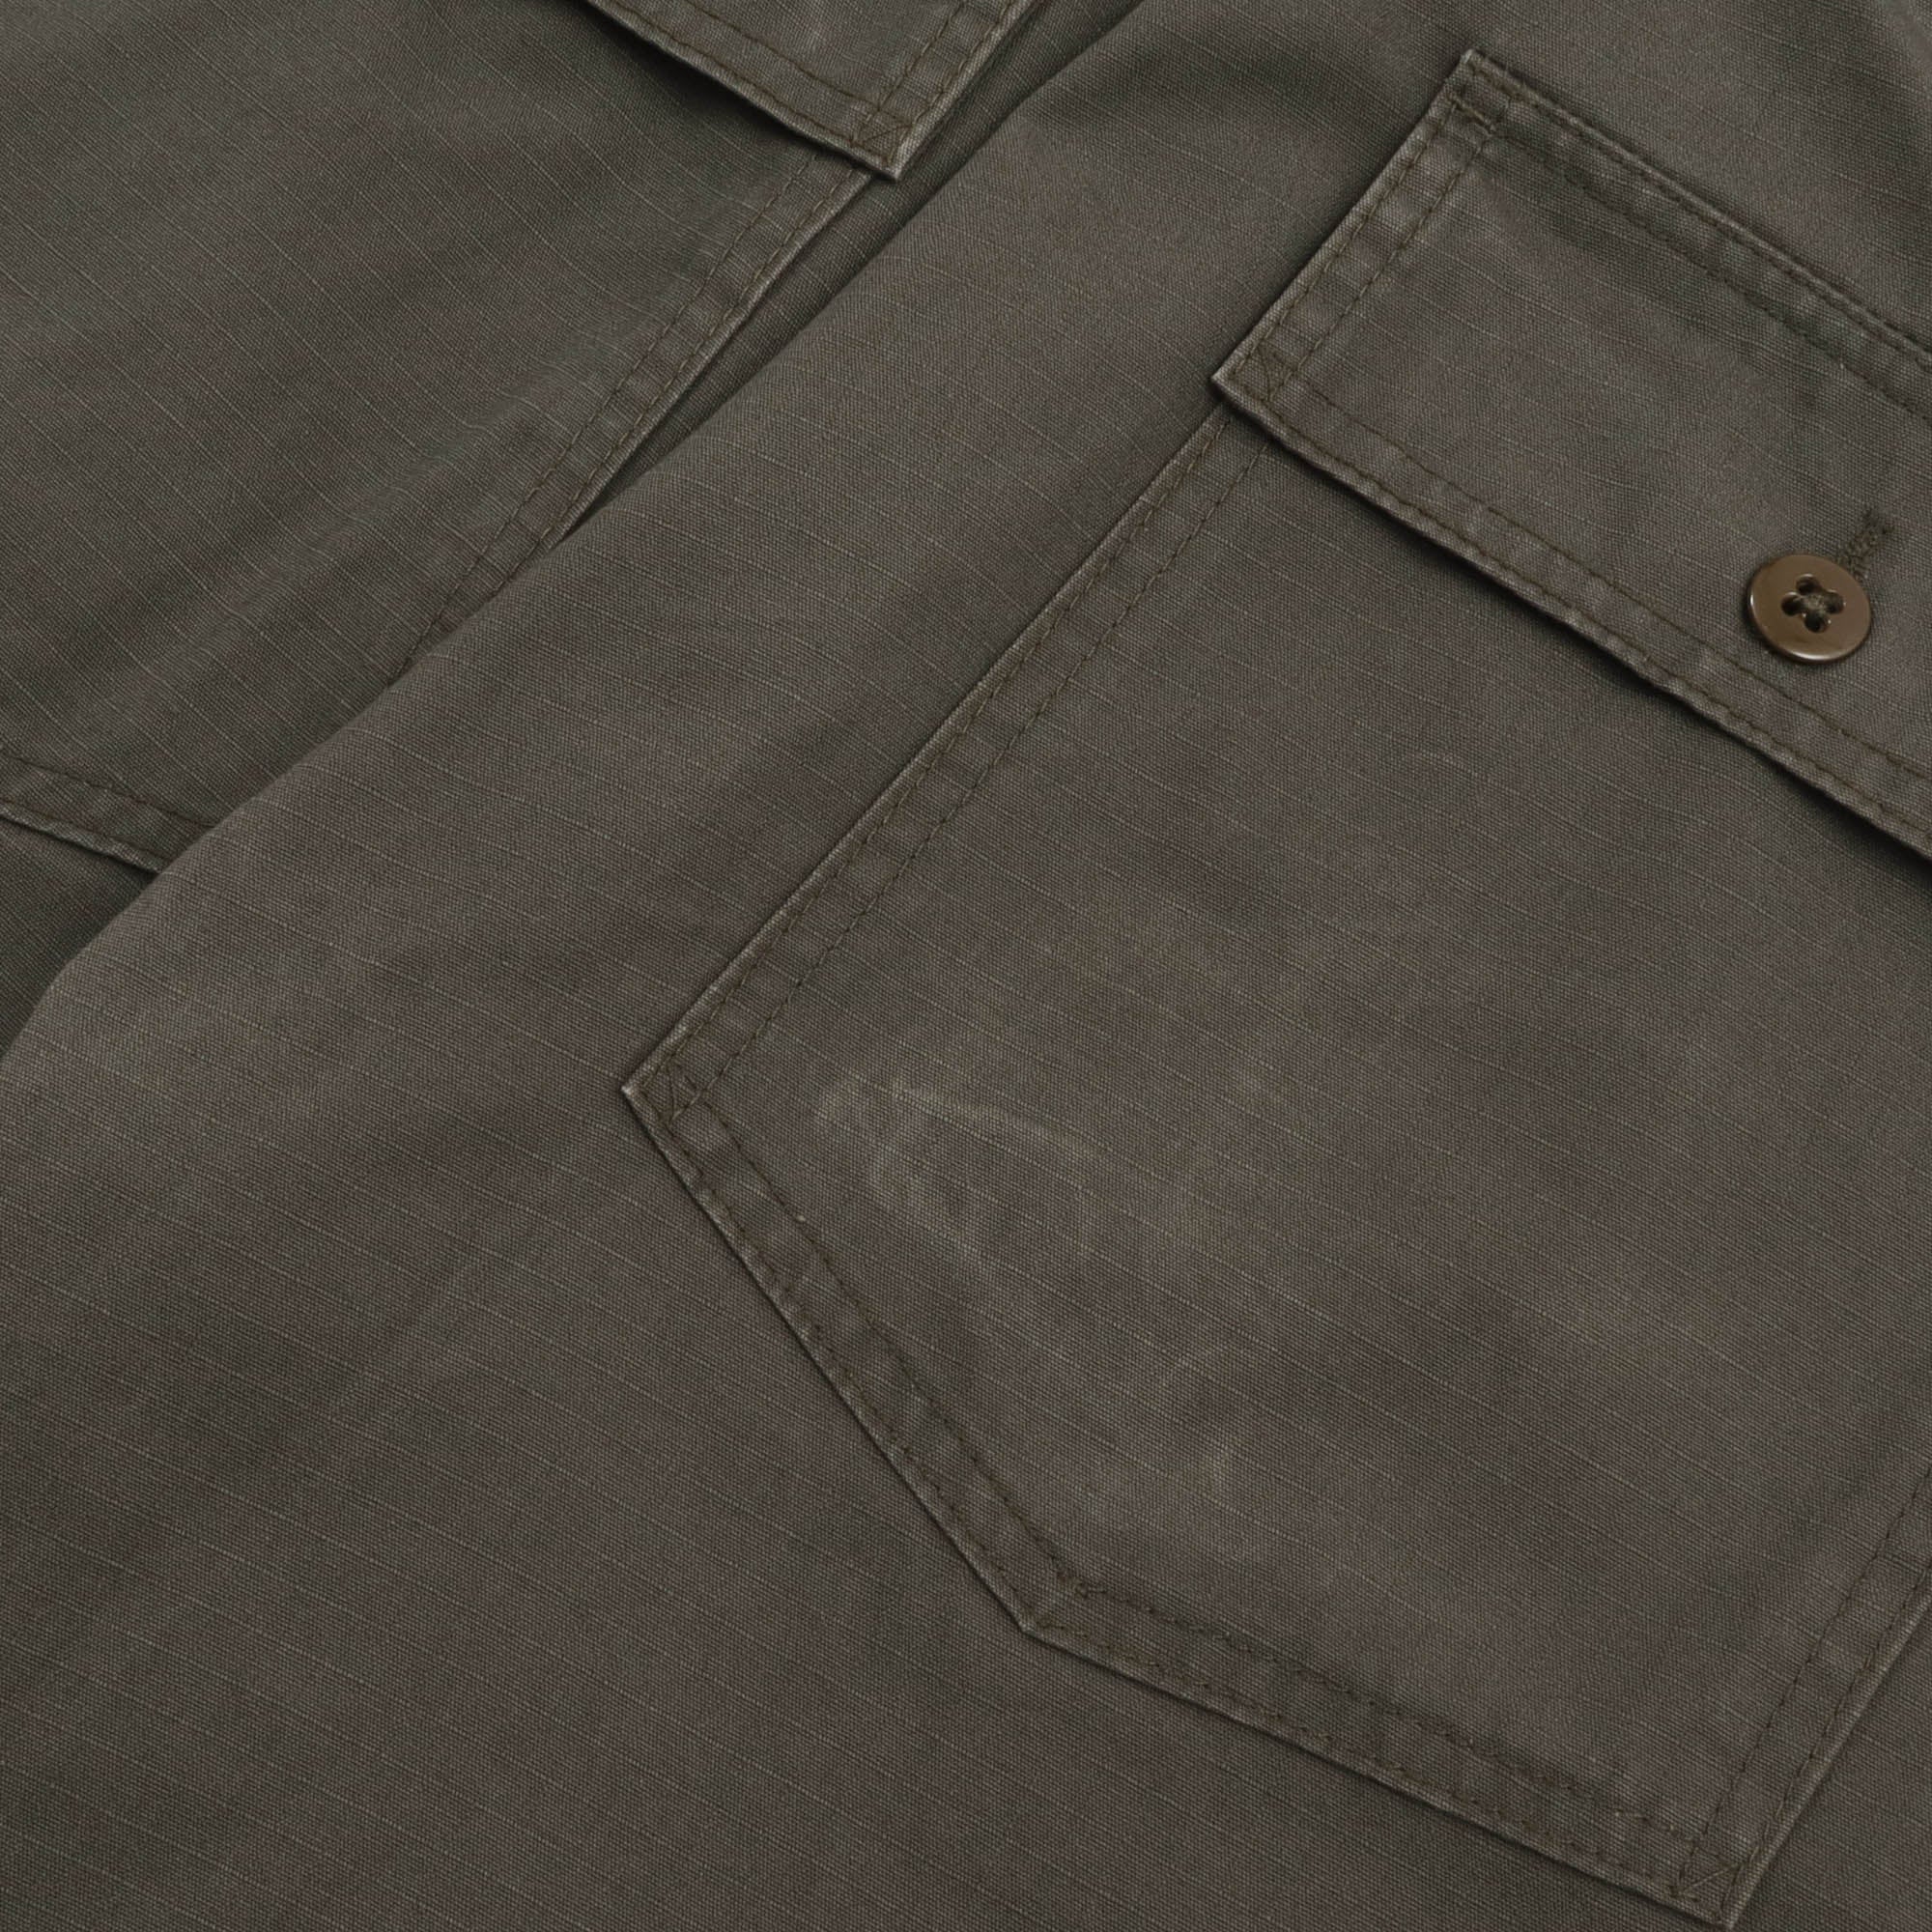 Engineered Garments Fatigue Pant – Marrkt